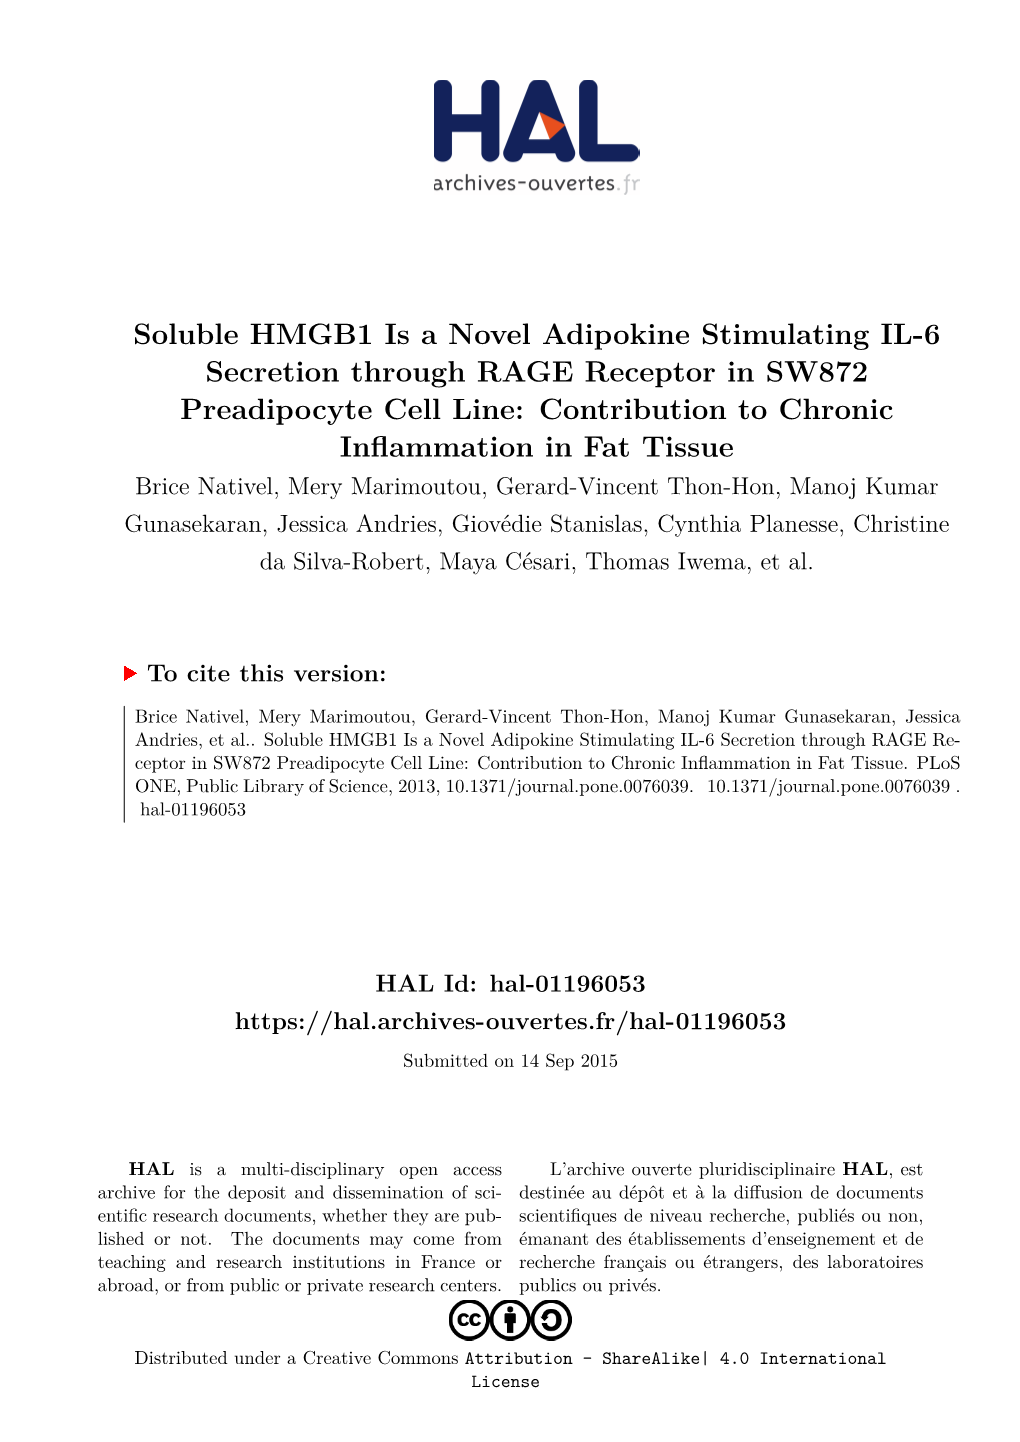 Soluble HMGB1 Is a Novel Adipokine Stimulating